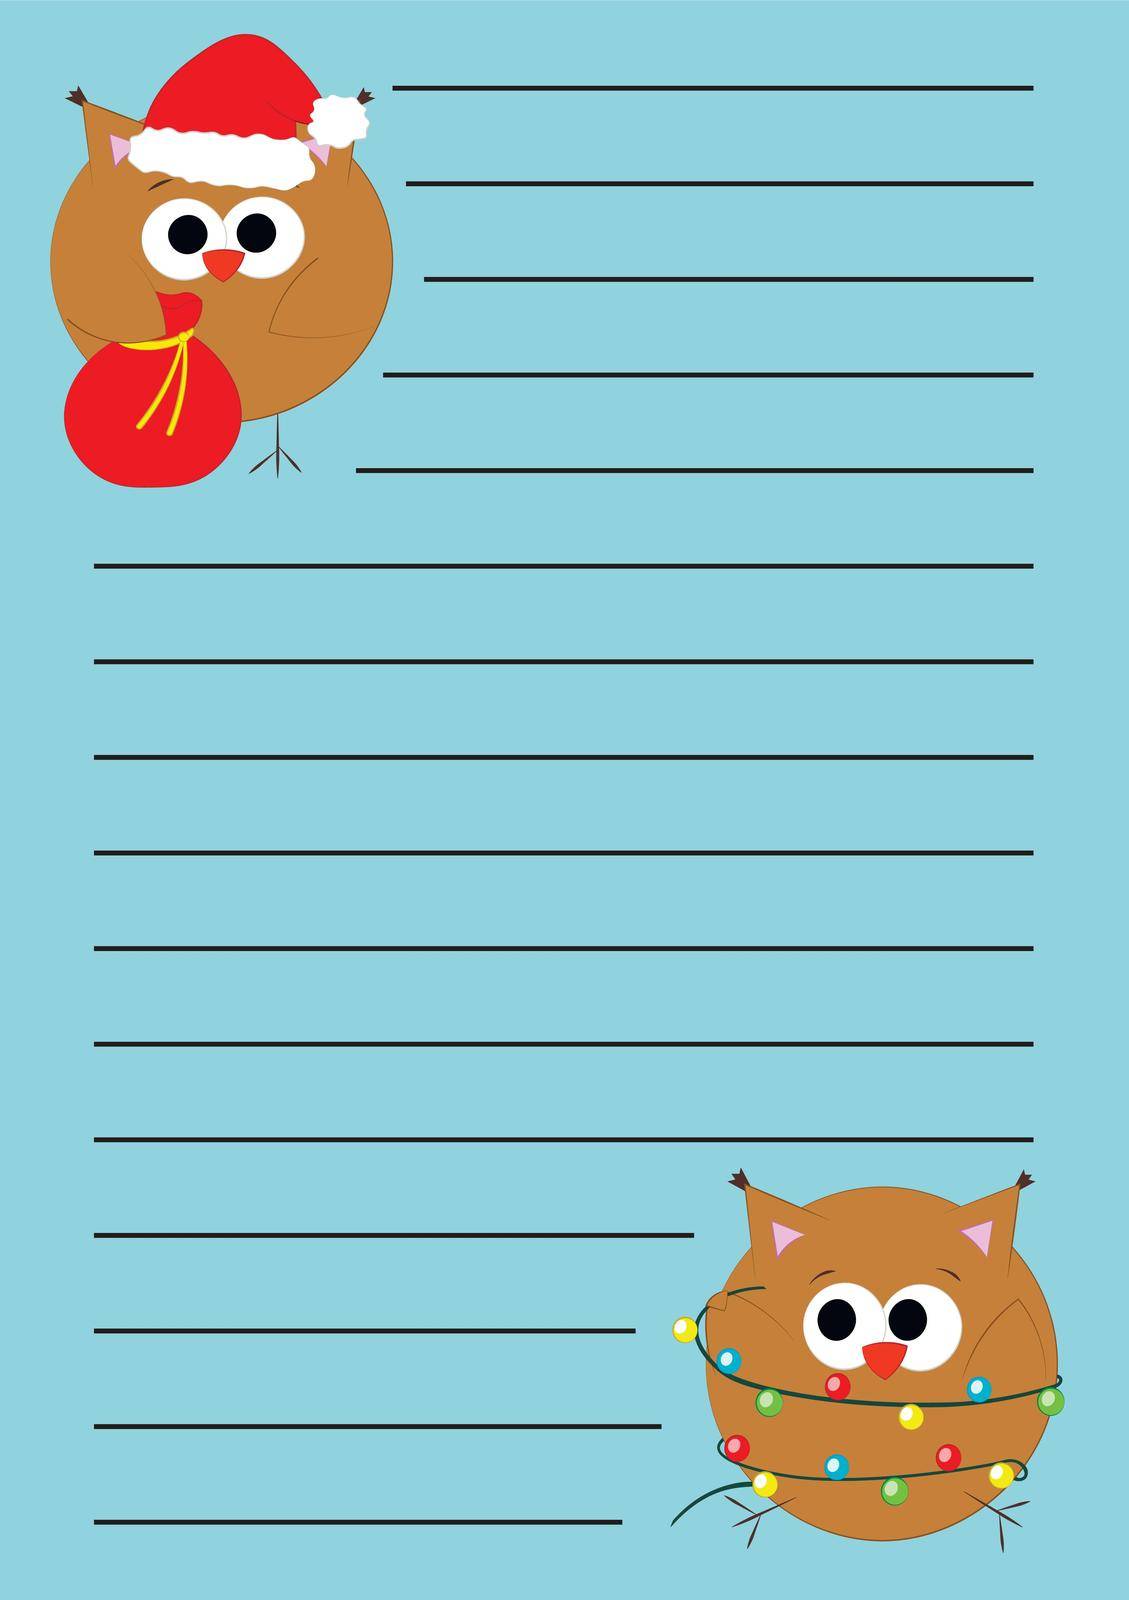 Cheek list planner with cute cartoon Christmas Owl by AnastasiaPen